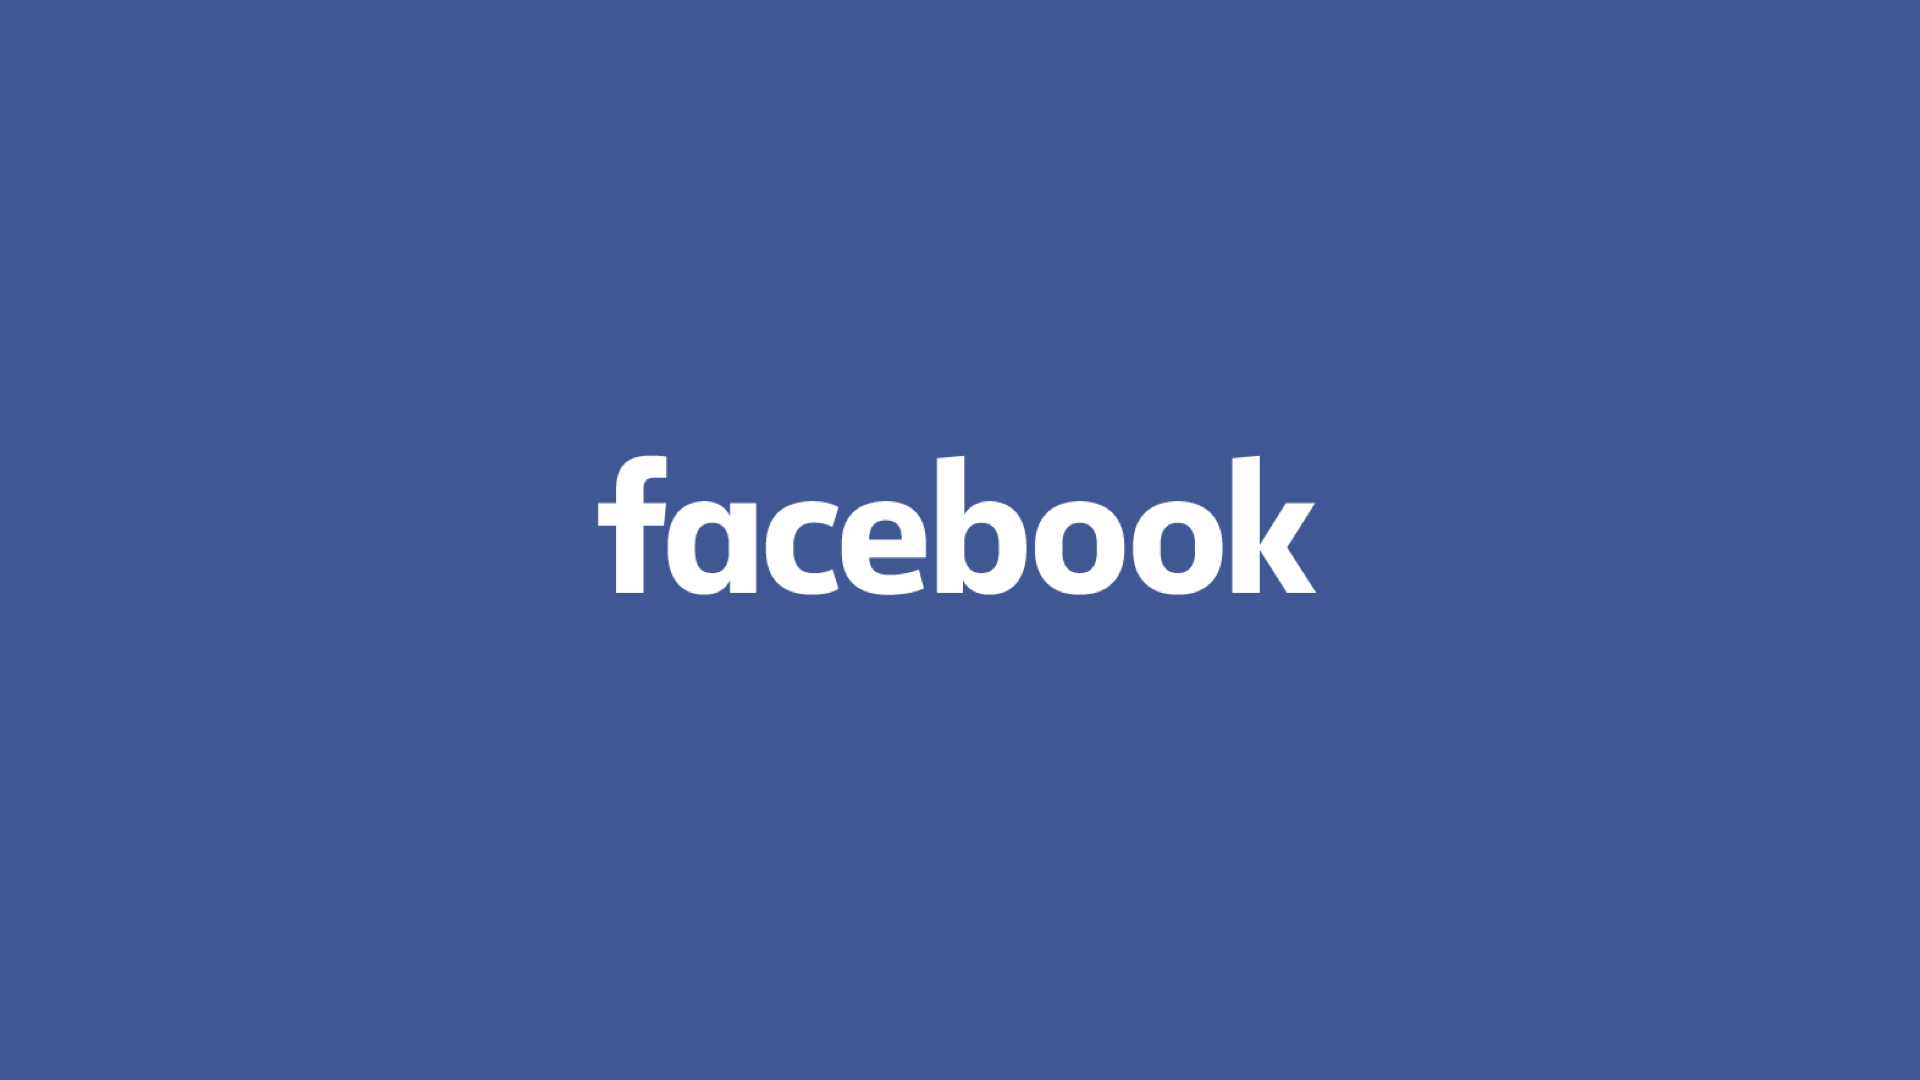 Facebook needs positive regulatory framework